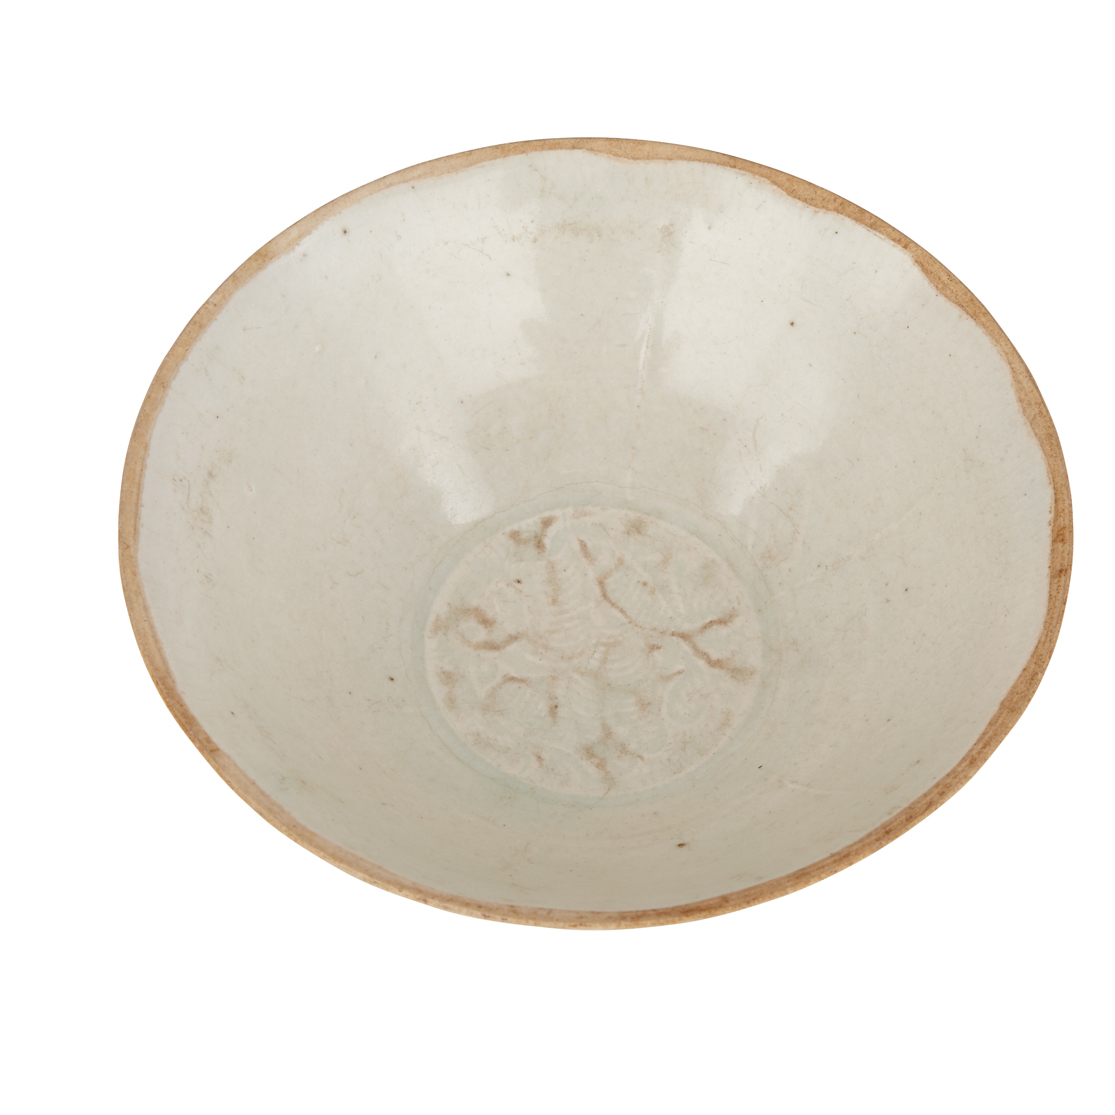 Qingbai Glazed Bowl